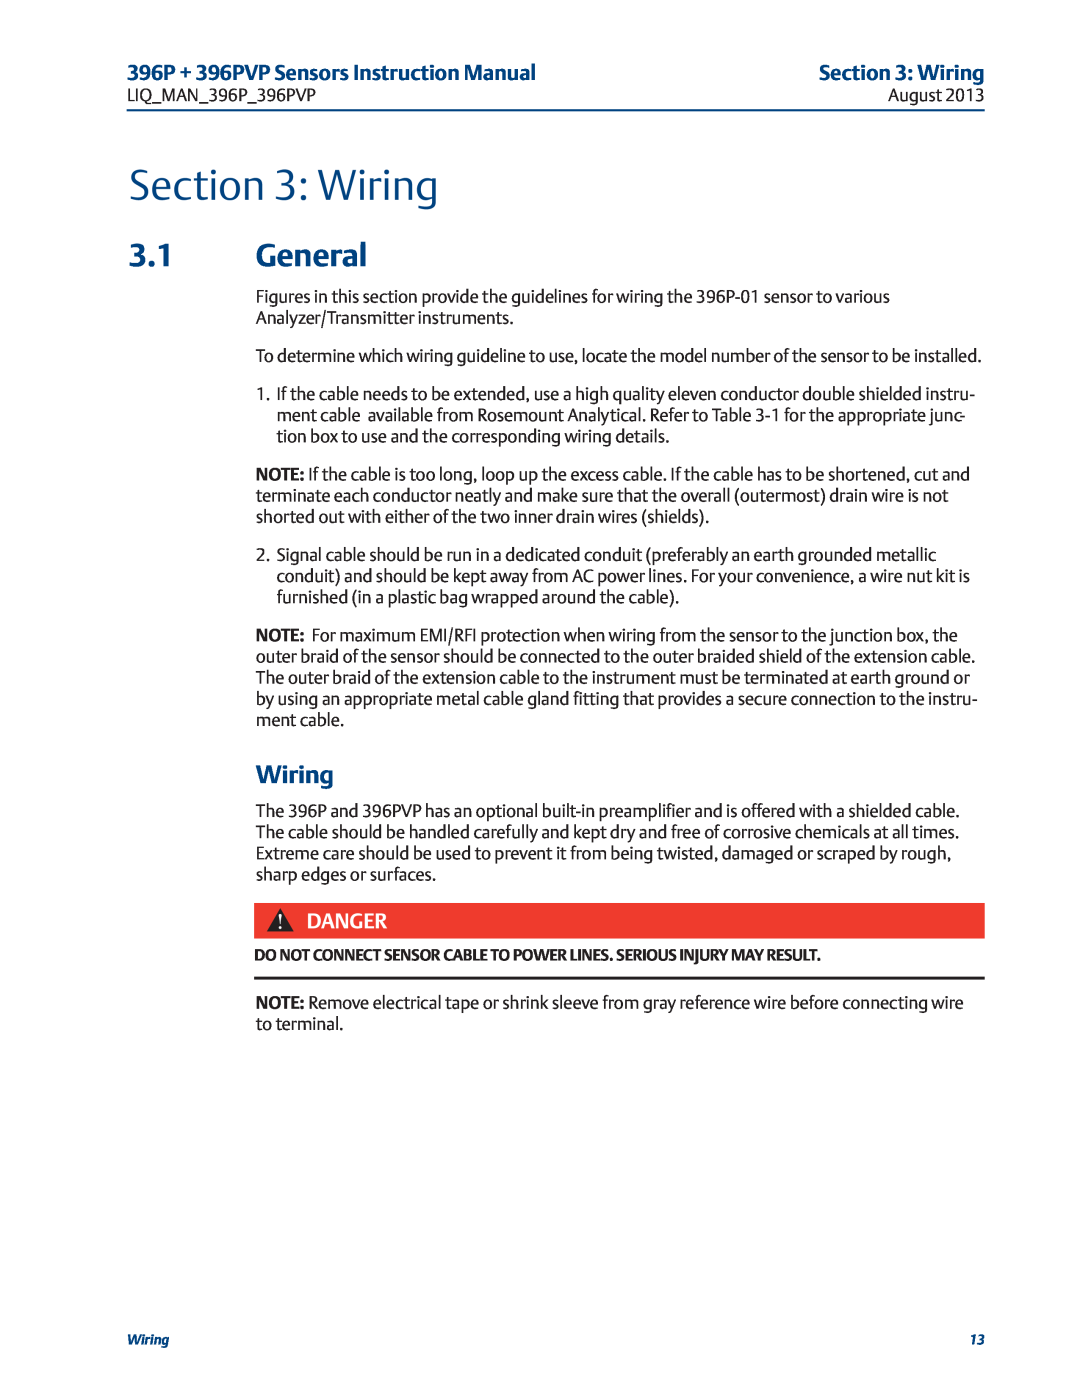 Emerson instruction manual Wiring, 3.1General, Danger, 396P + 396PVP Sensors Instruction Manual 